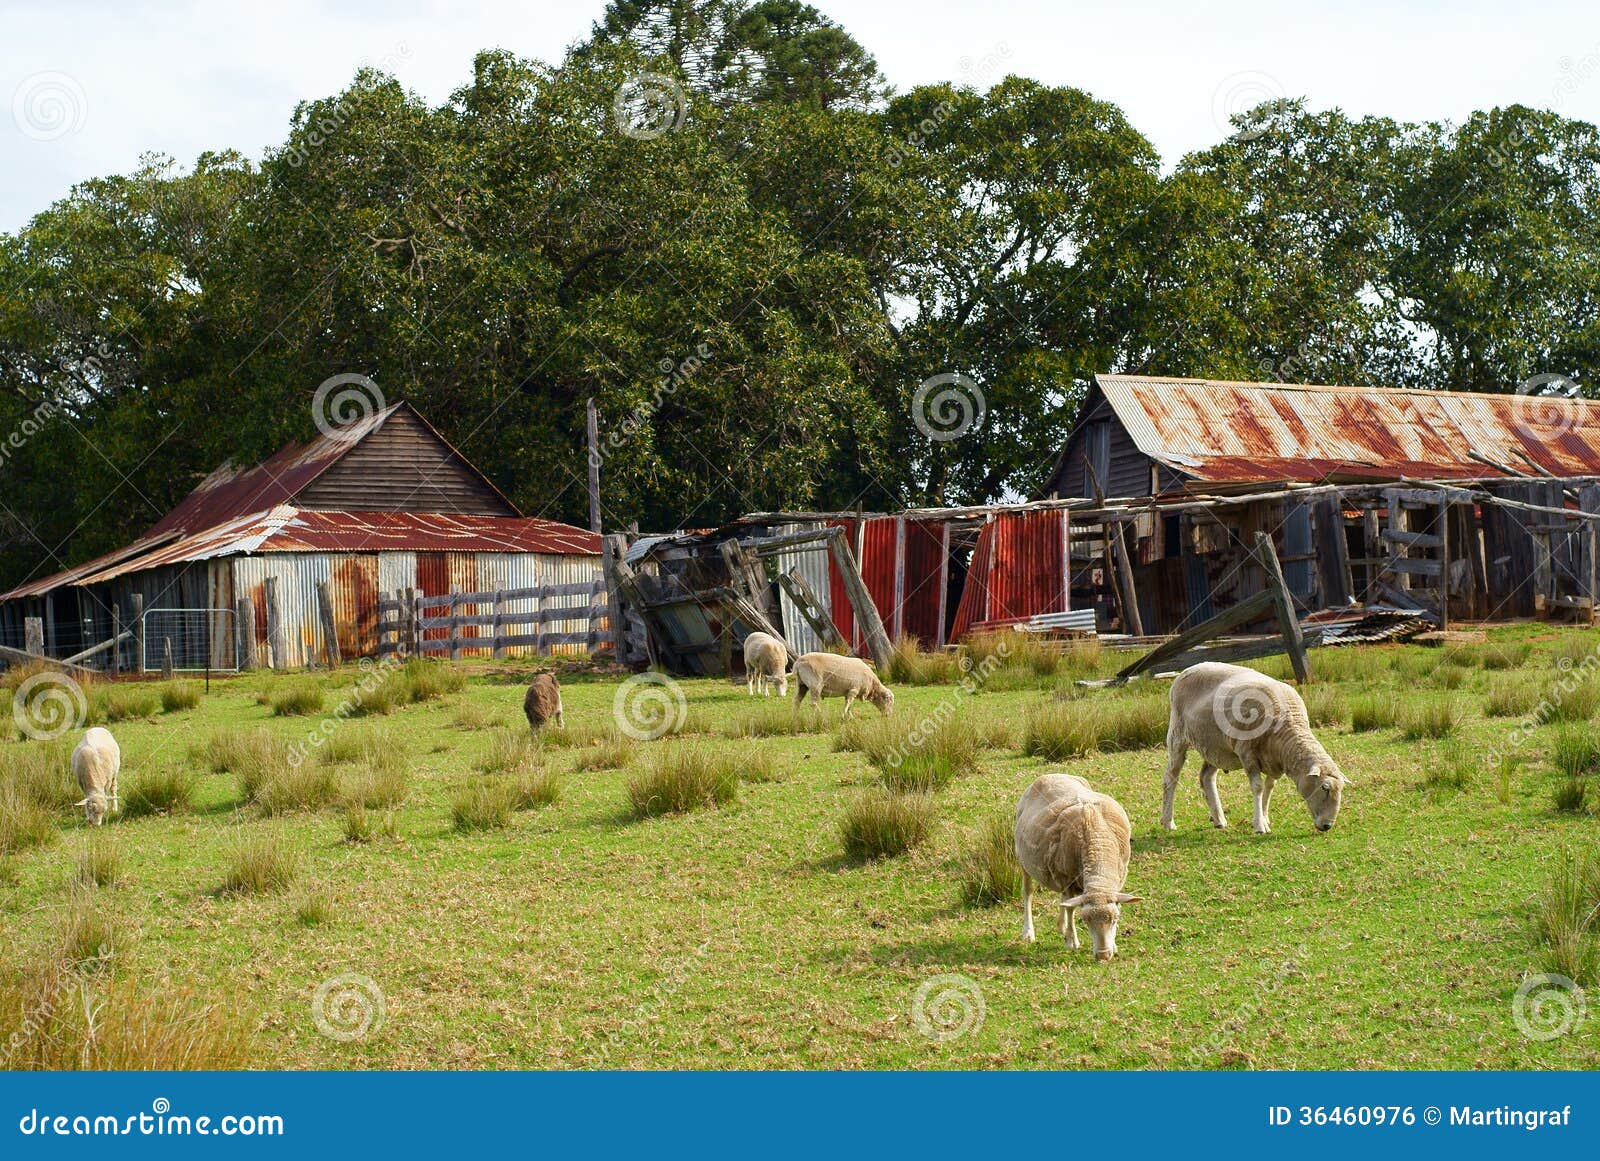 sheep farm vintage australia